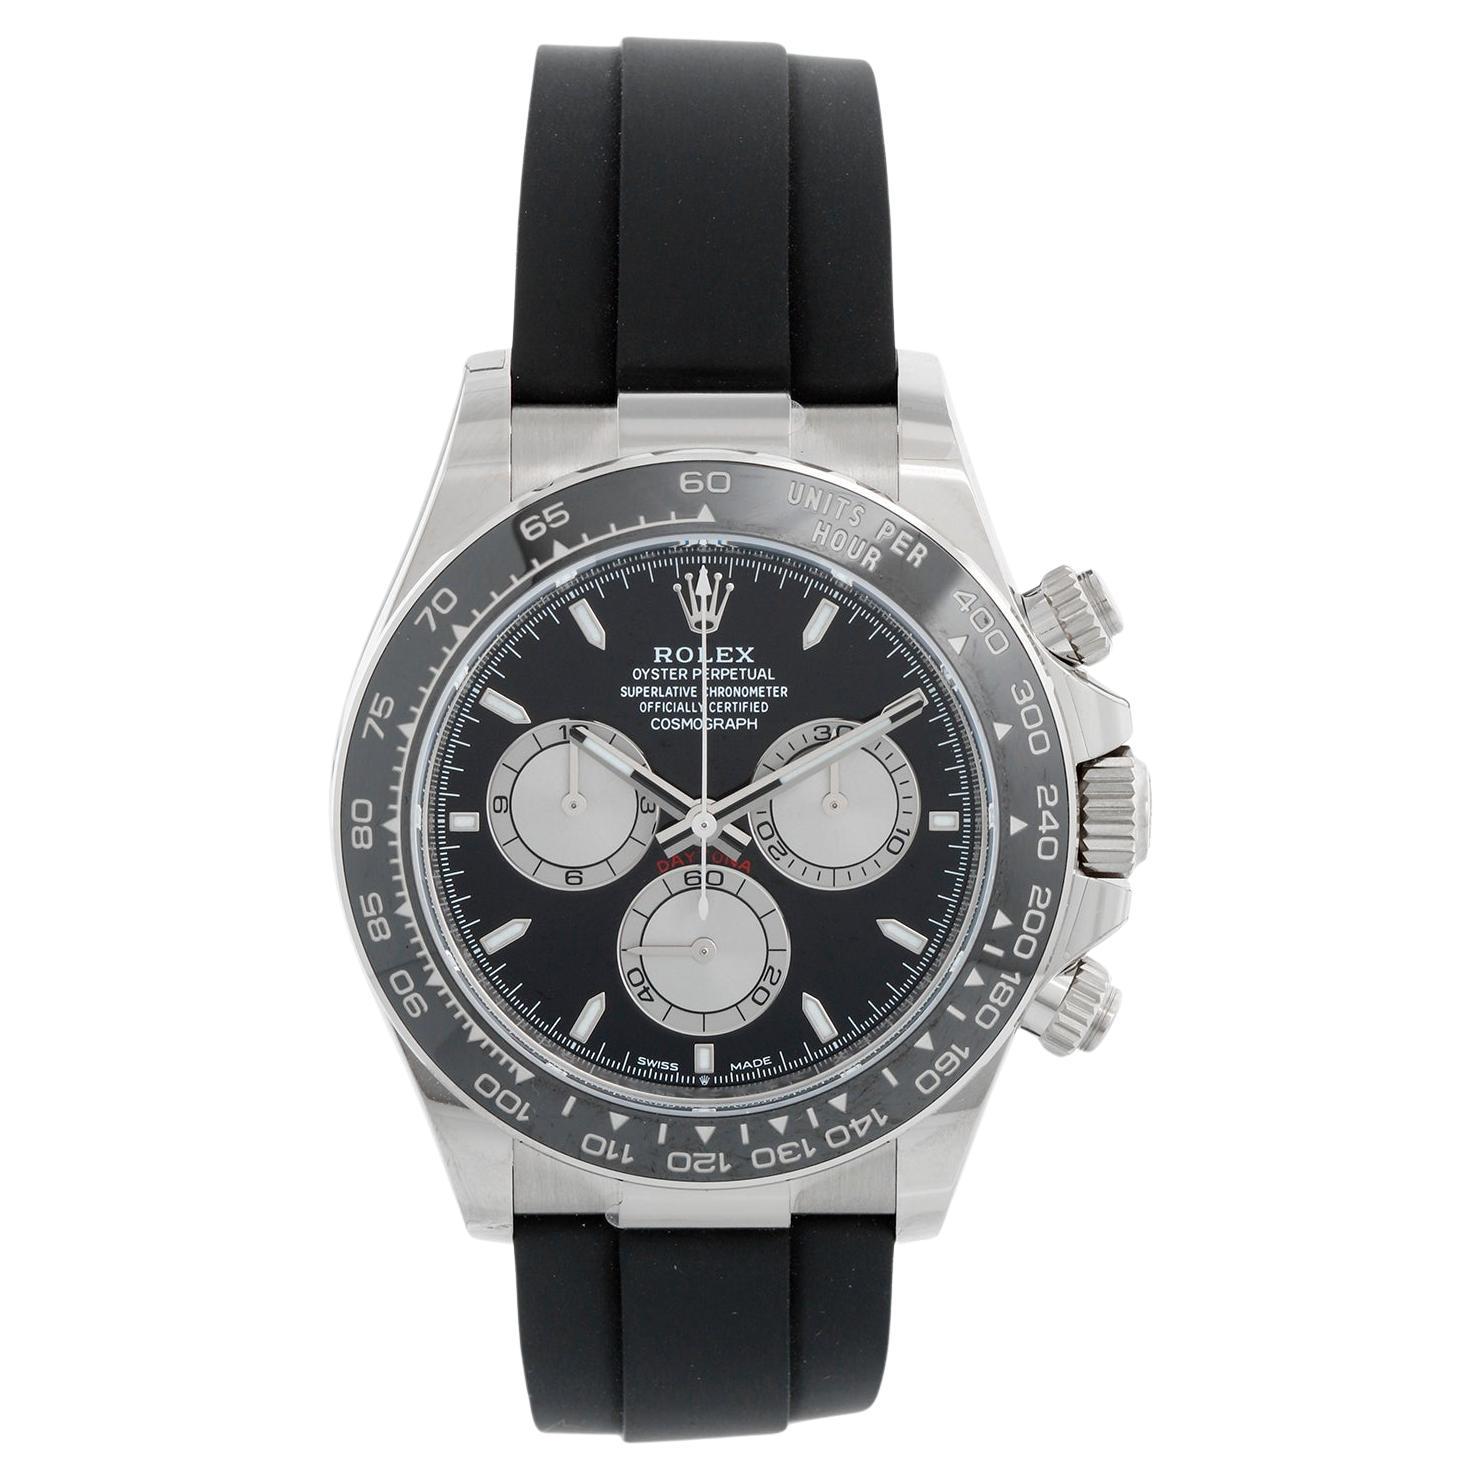 Rolex Cosmograph Daytona White Gold Watch 126519LN For Sale